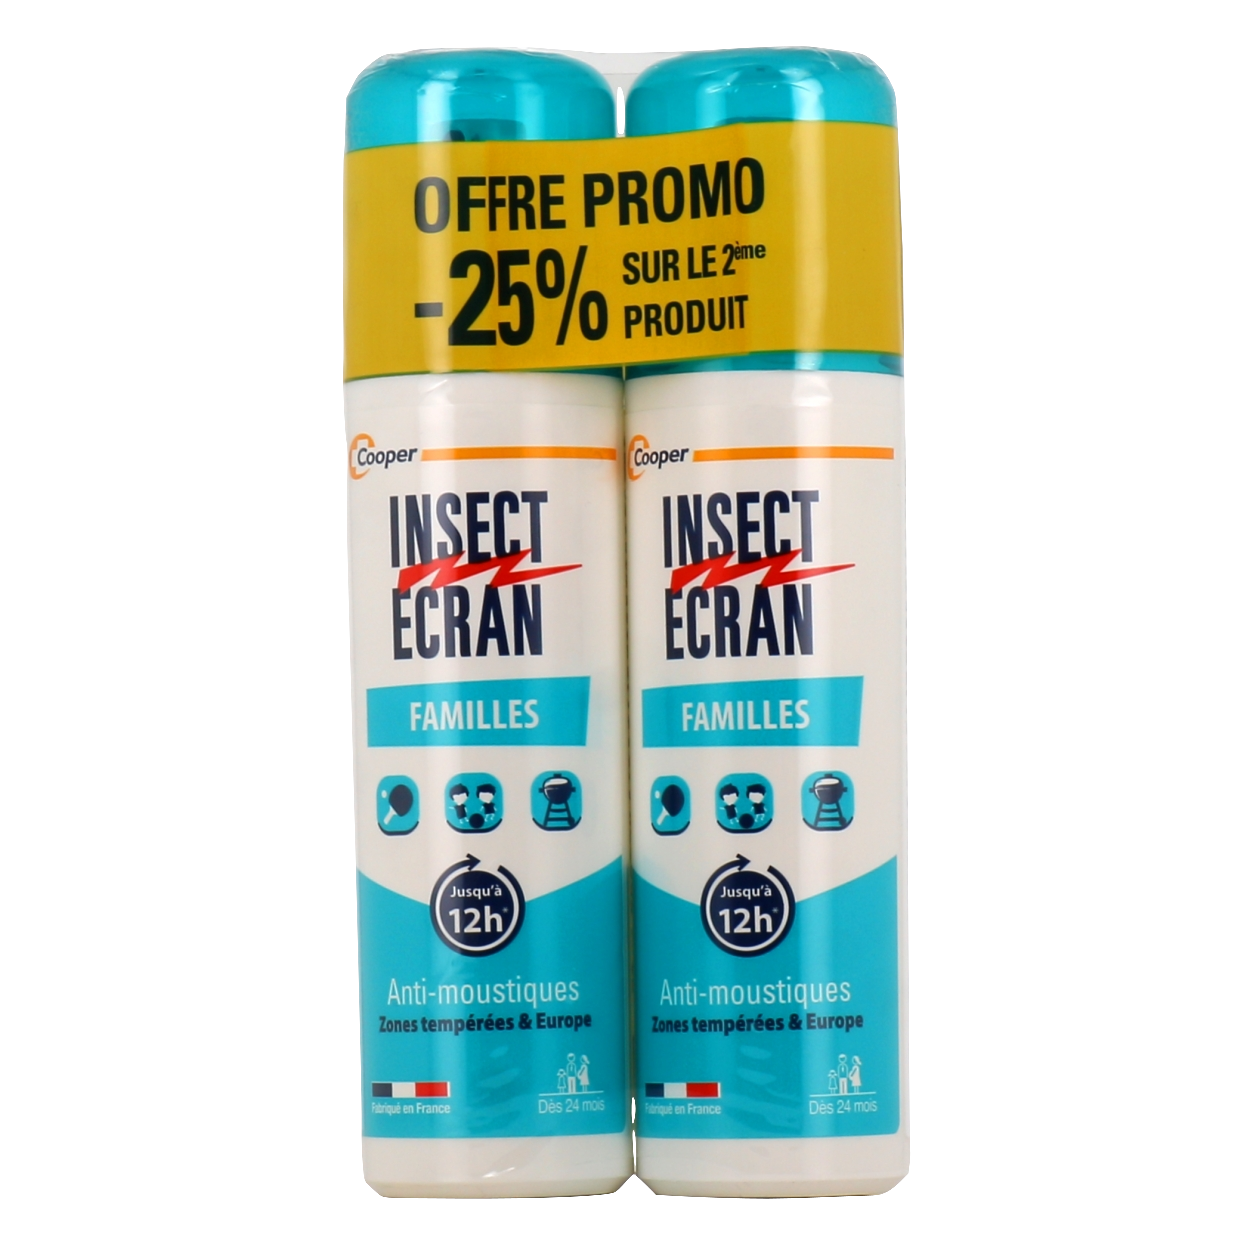 INSECT ECRAN Kids spécial enfants spray 100ml - Pharmacie Prado Mermoz